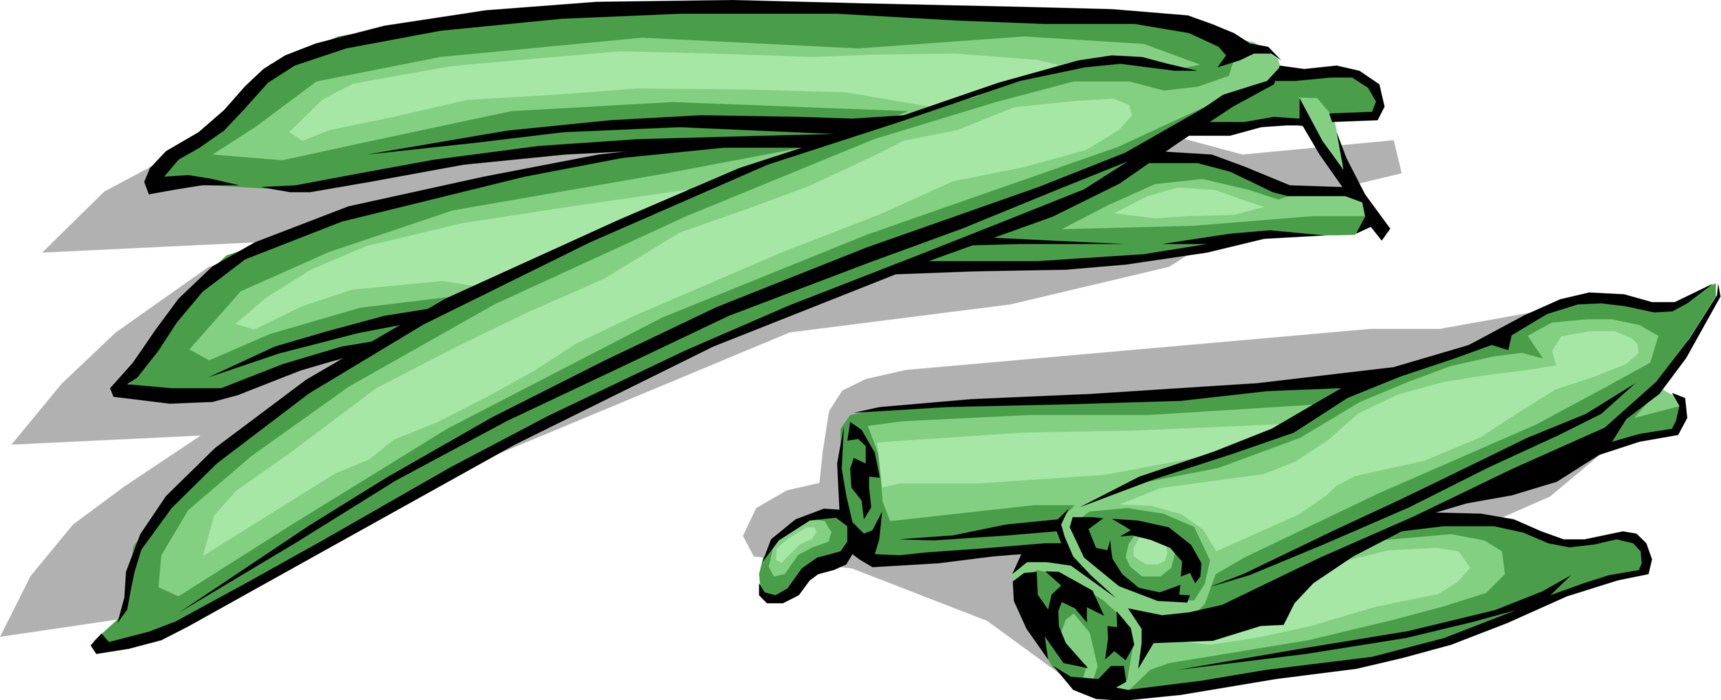 Vector Illustration of Garden Vegetable Cut Green String or Snap Haricot Beans